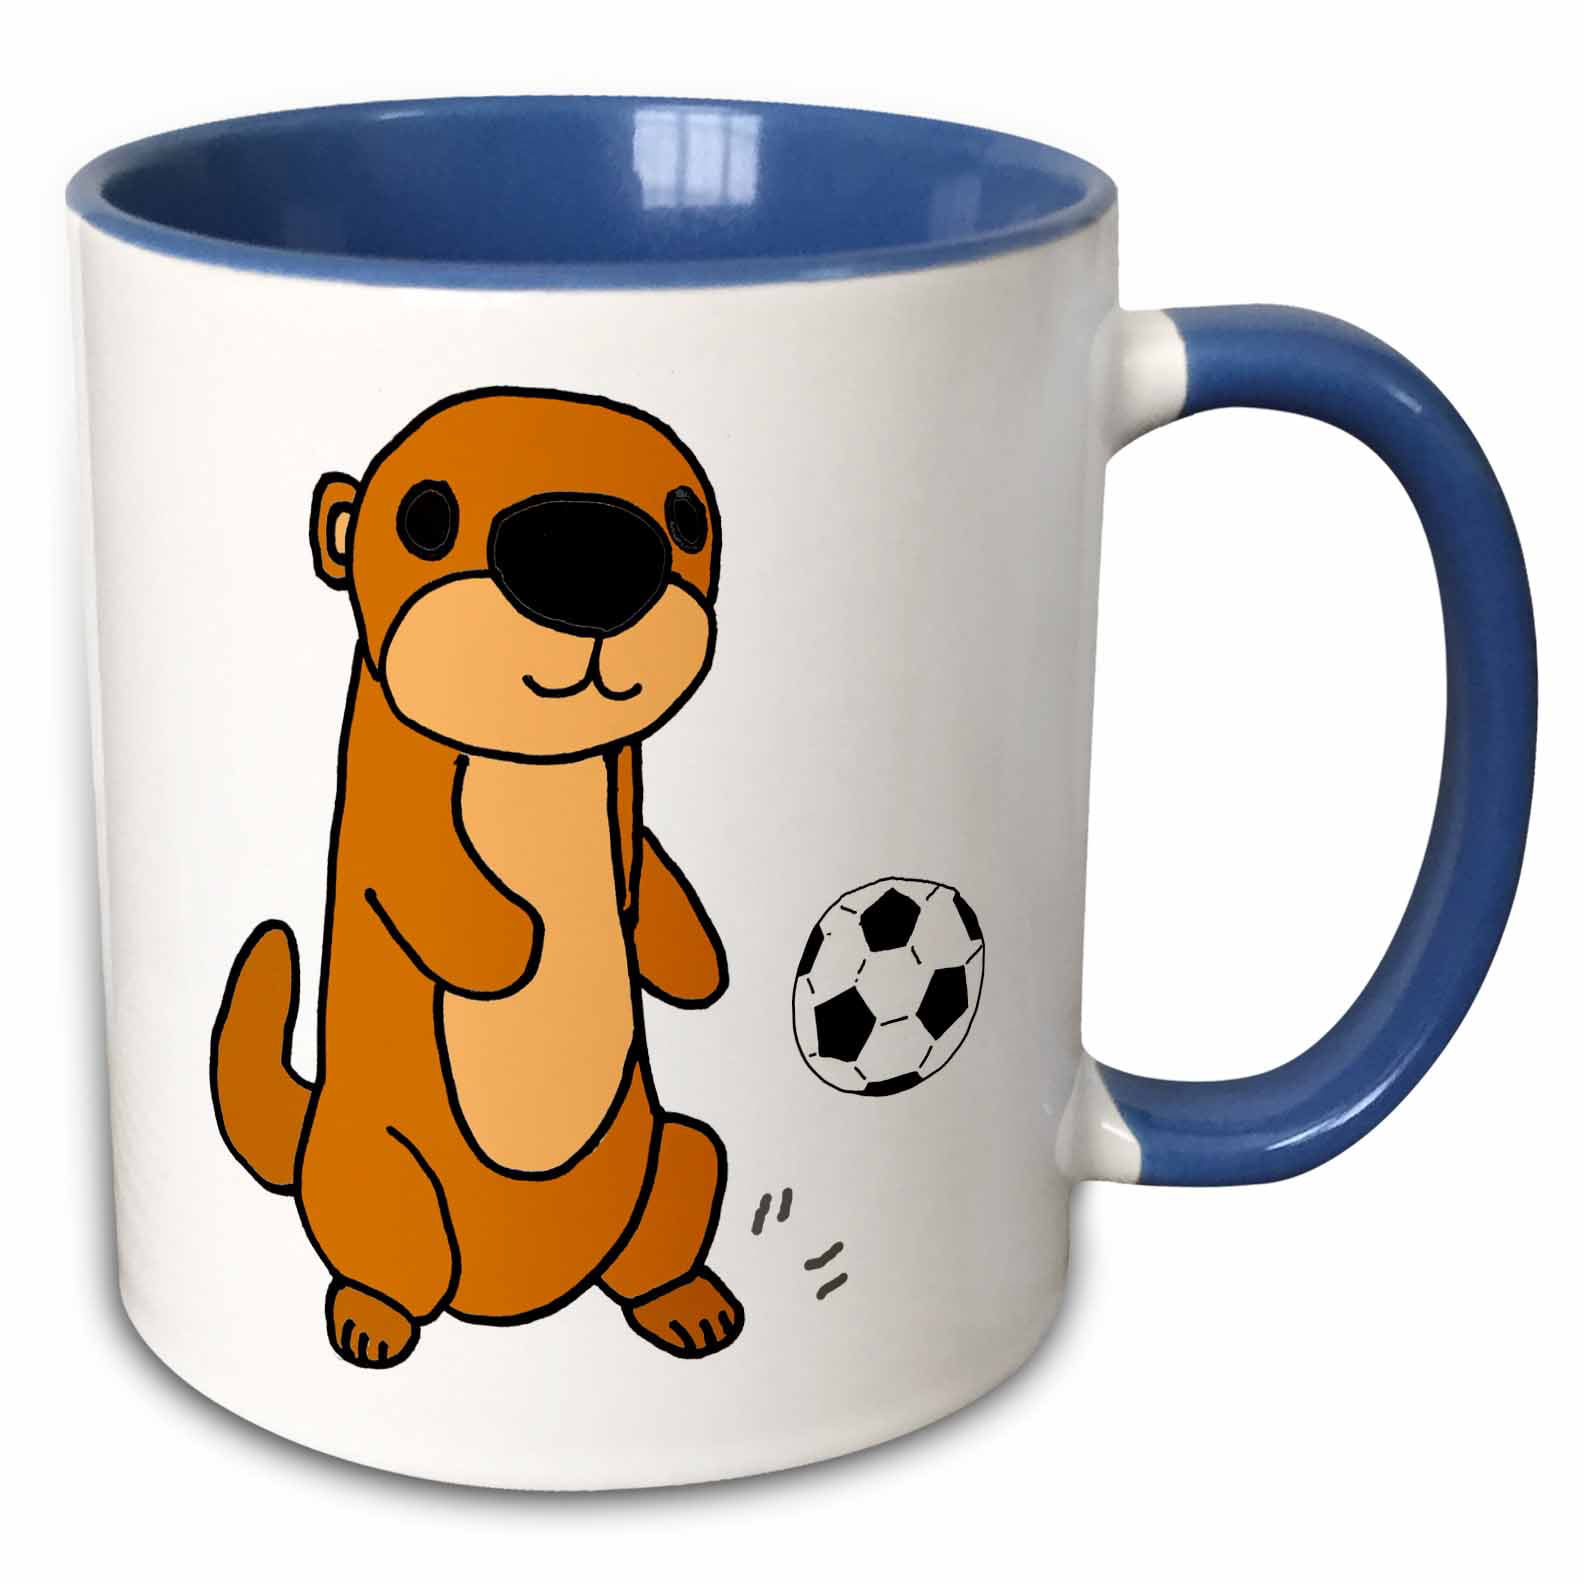 CafePress Otter Mug 11 oz Ceramic Mug 561273641 